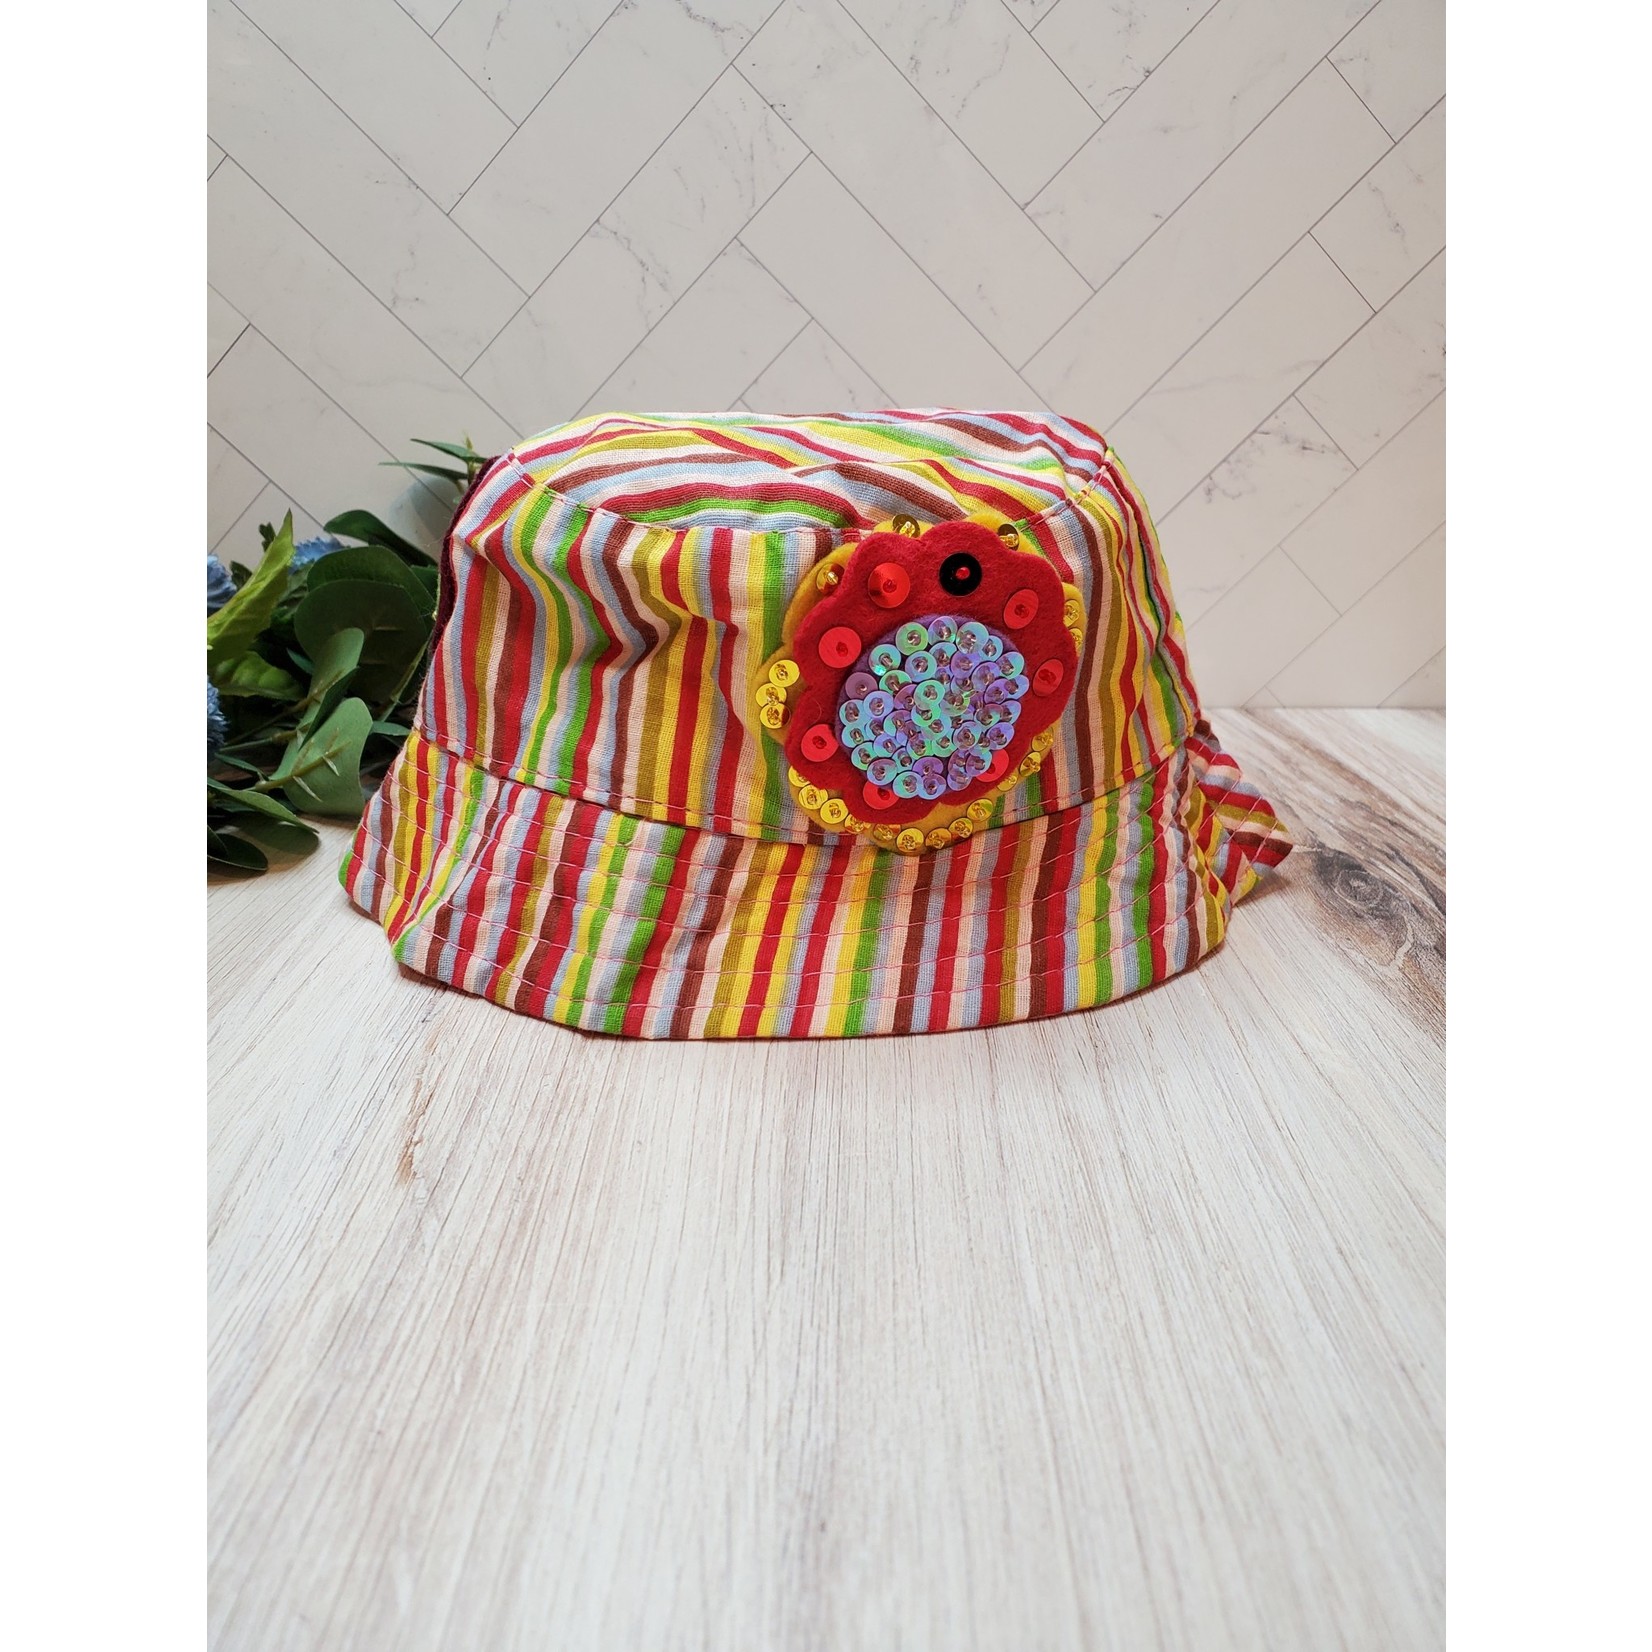 Roan's Repertoire Toddler Bucket Hat with Sequin Flower - Rainbow Stripe